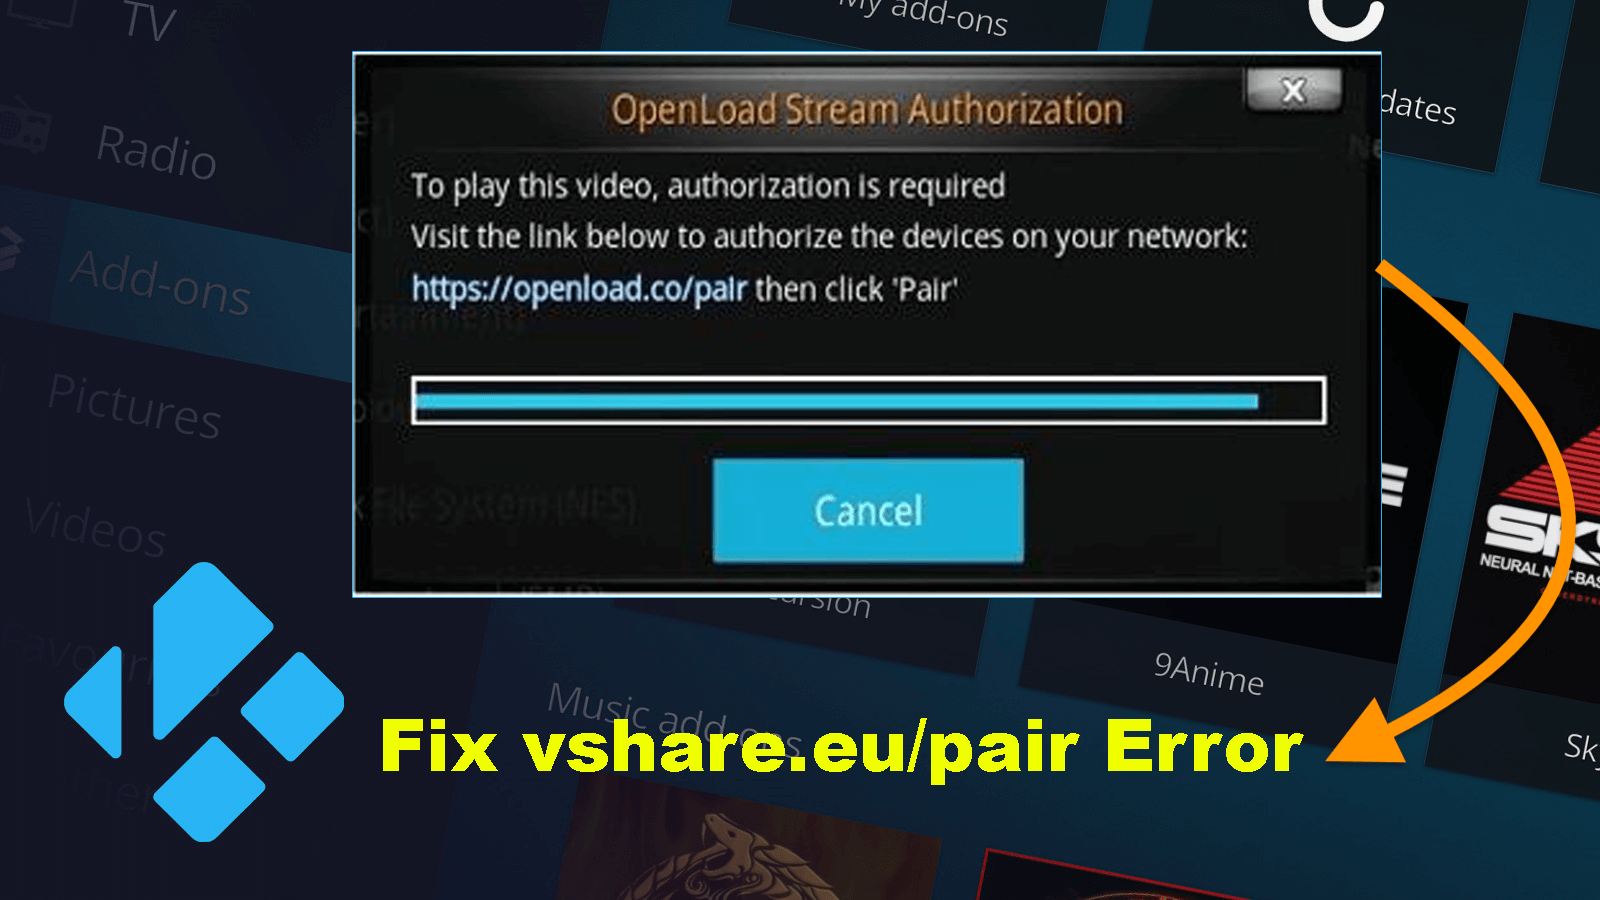 How To Fix http://vshare.eu/pair Error On Kodi